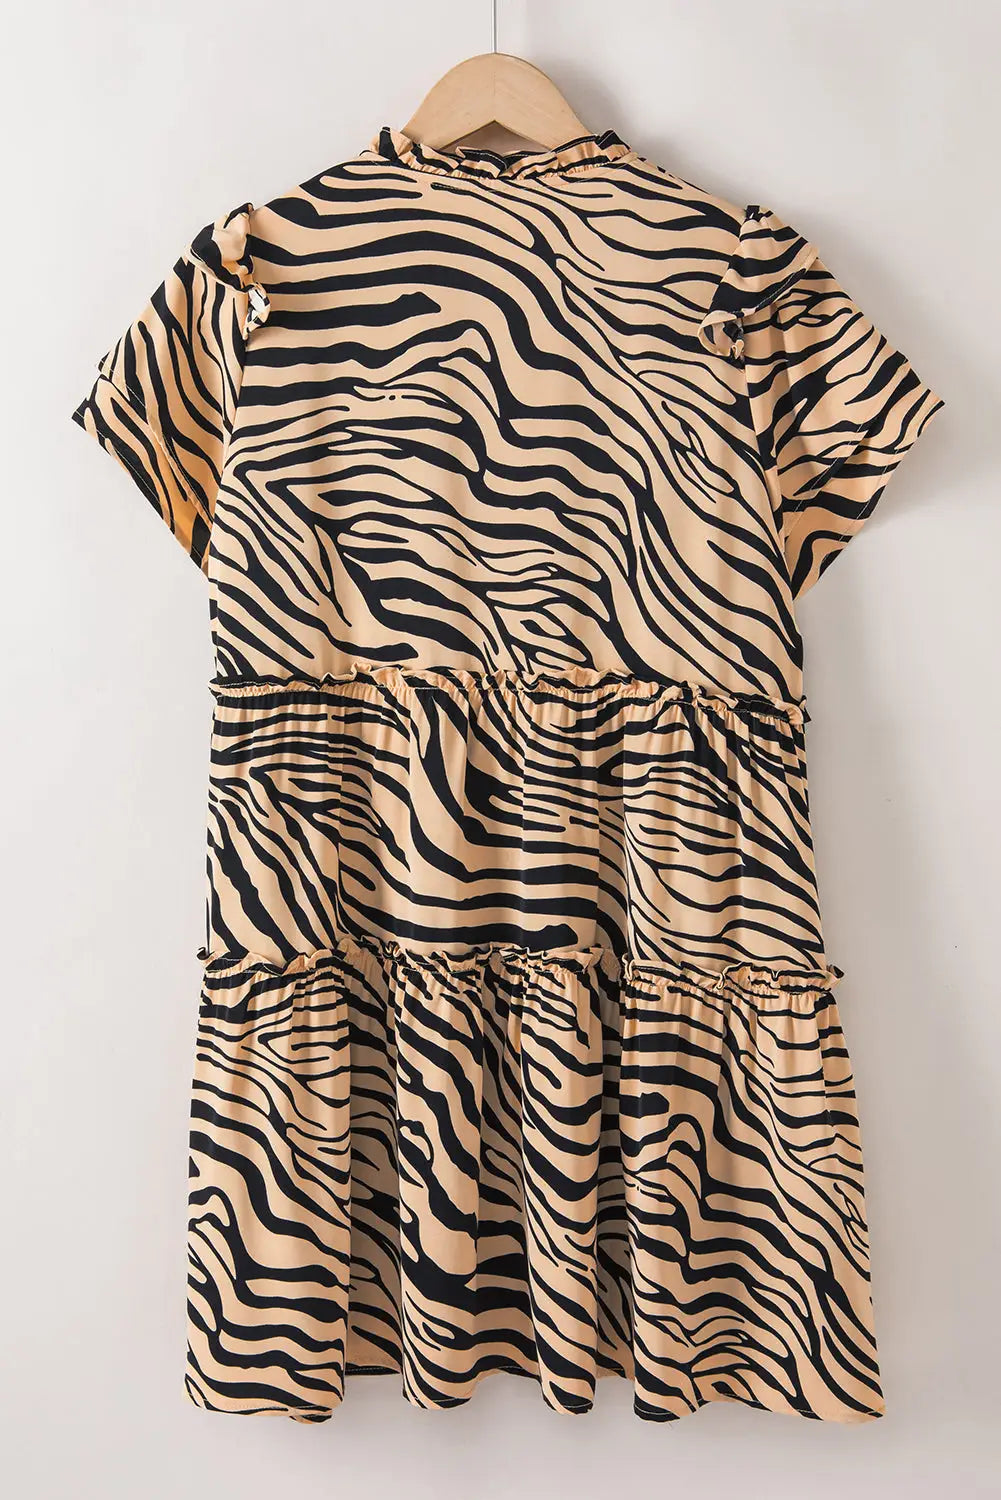 Brown zebra mini dress - dresses/mini dresses